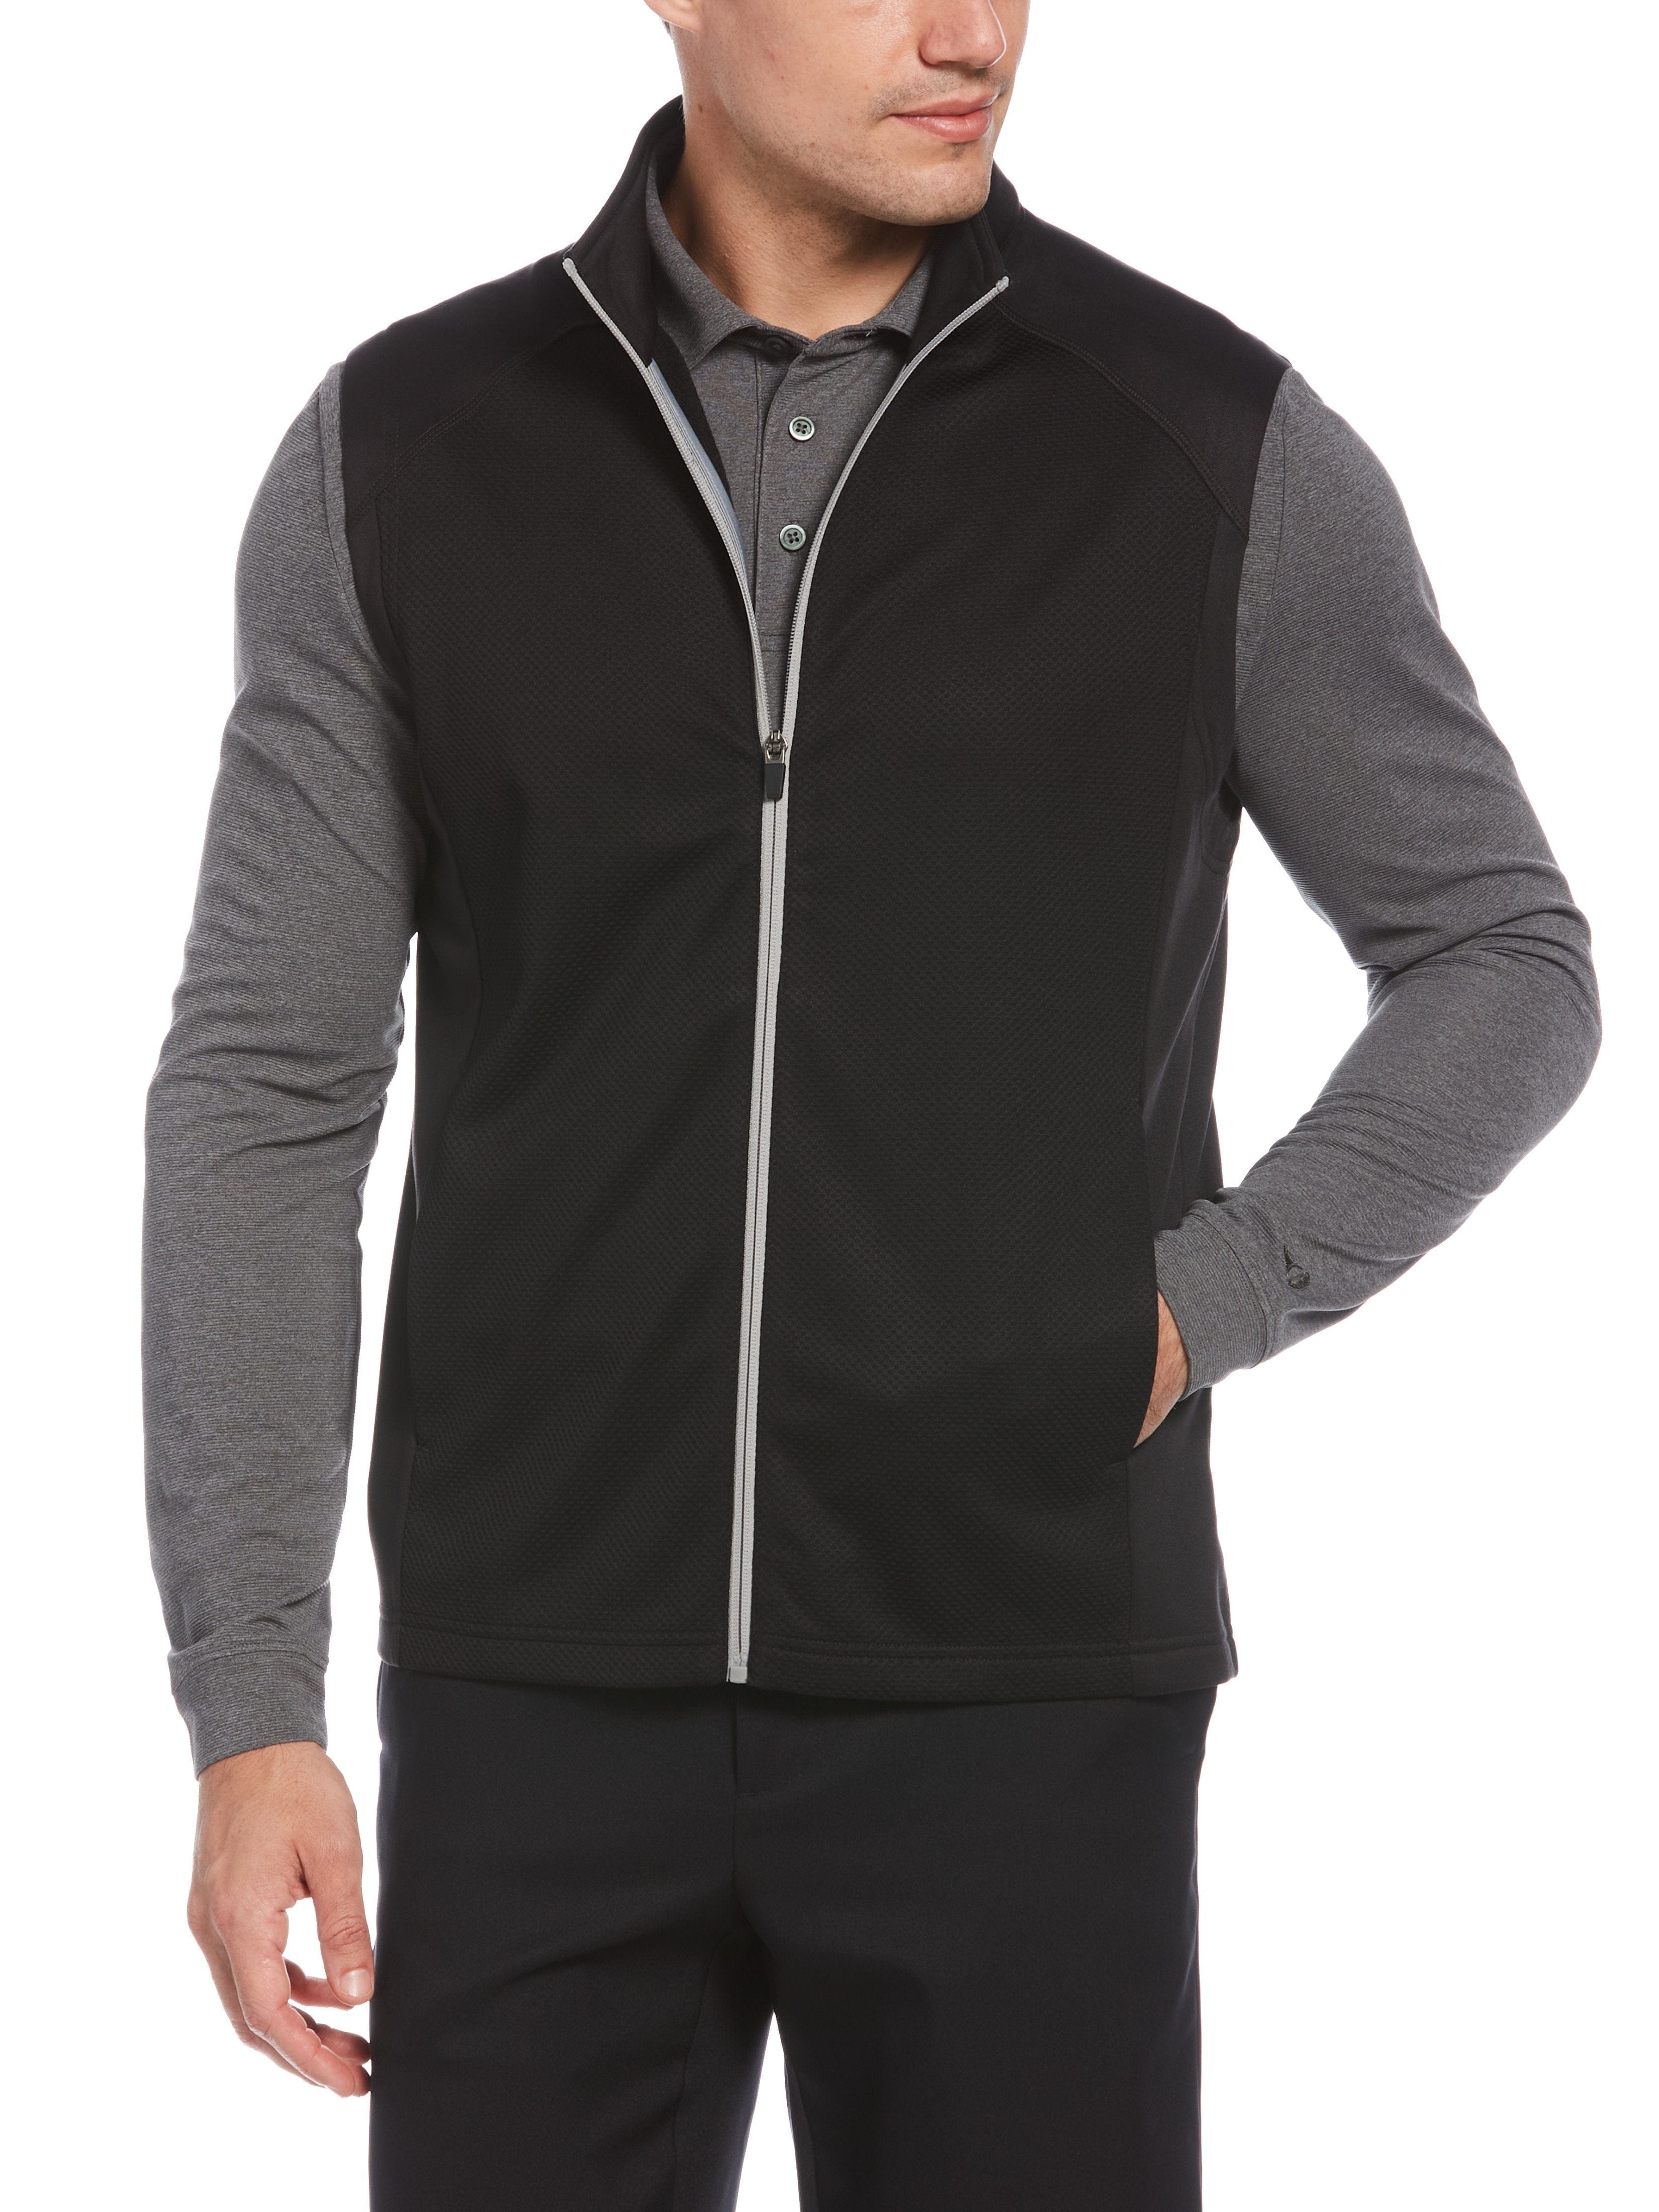 PGA TOUR Apparel Mens Mixed Texture Fleece Golf Vest Top, Size Large, Black, 100% Polyester | Golf Apparel Shop